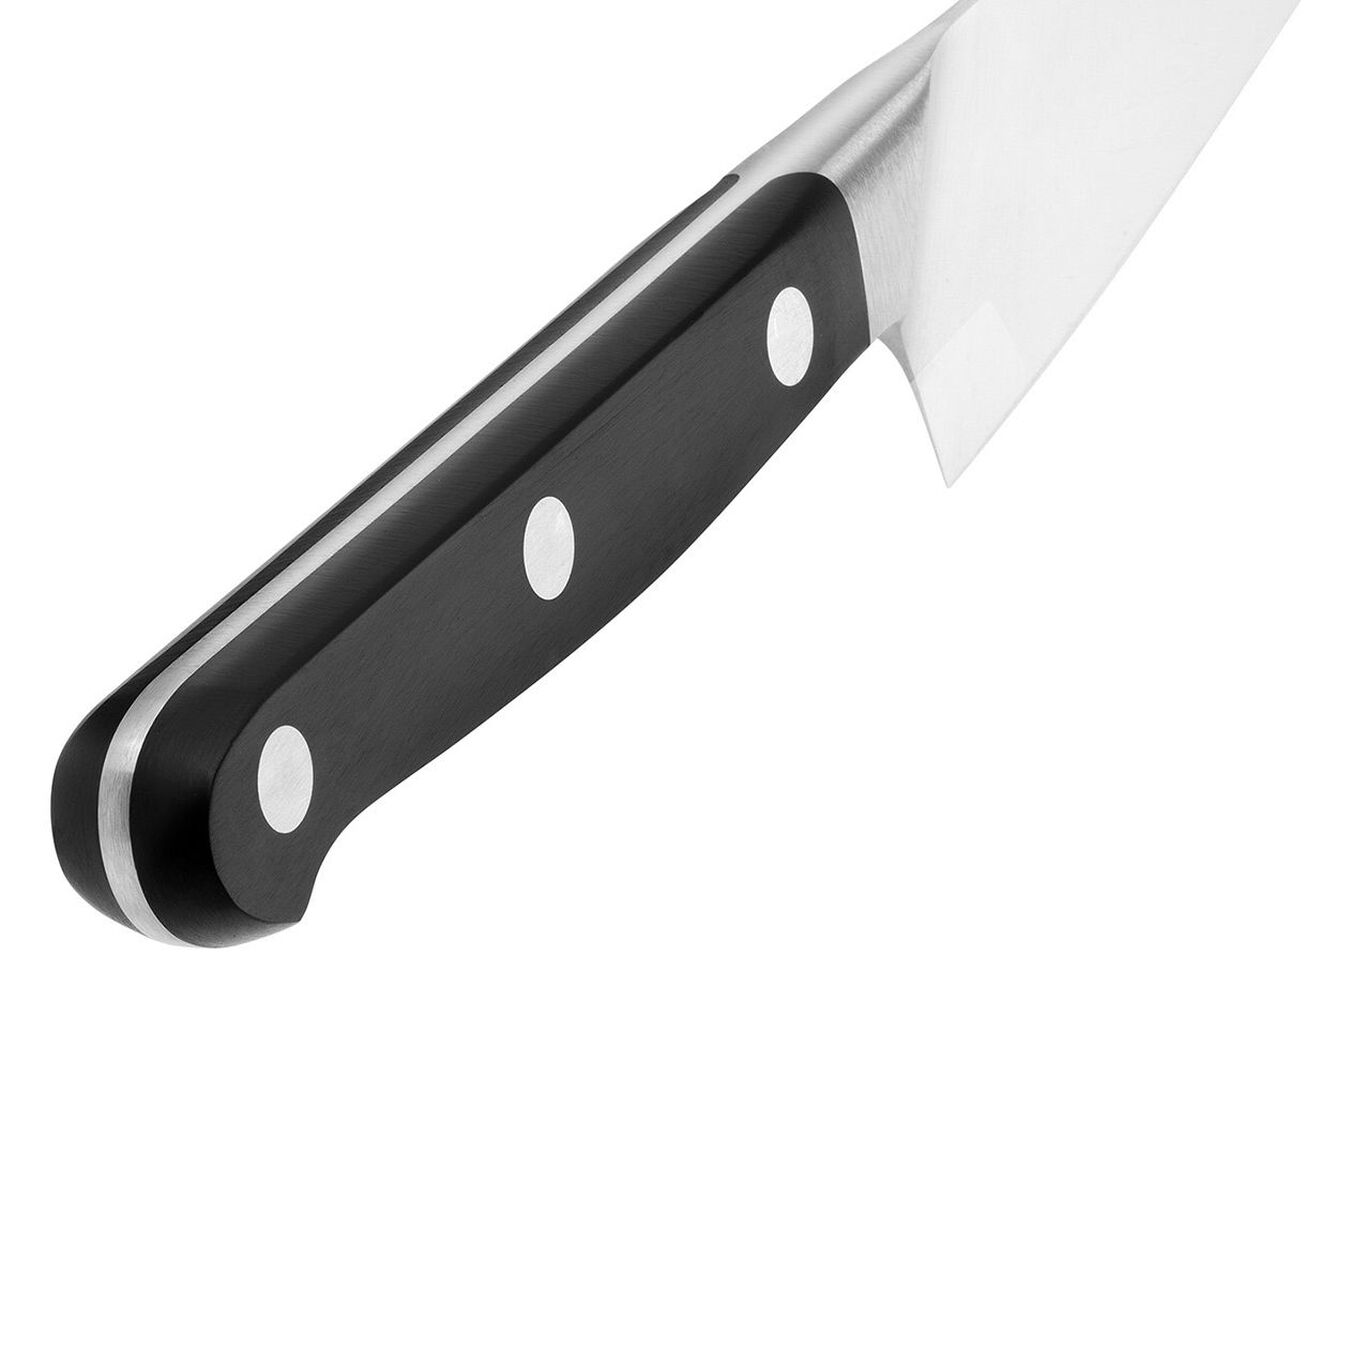 Kompakt kockkniv 14 cm,,large 5